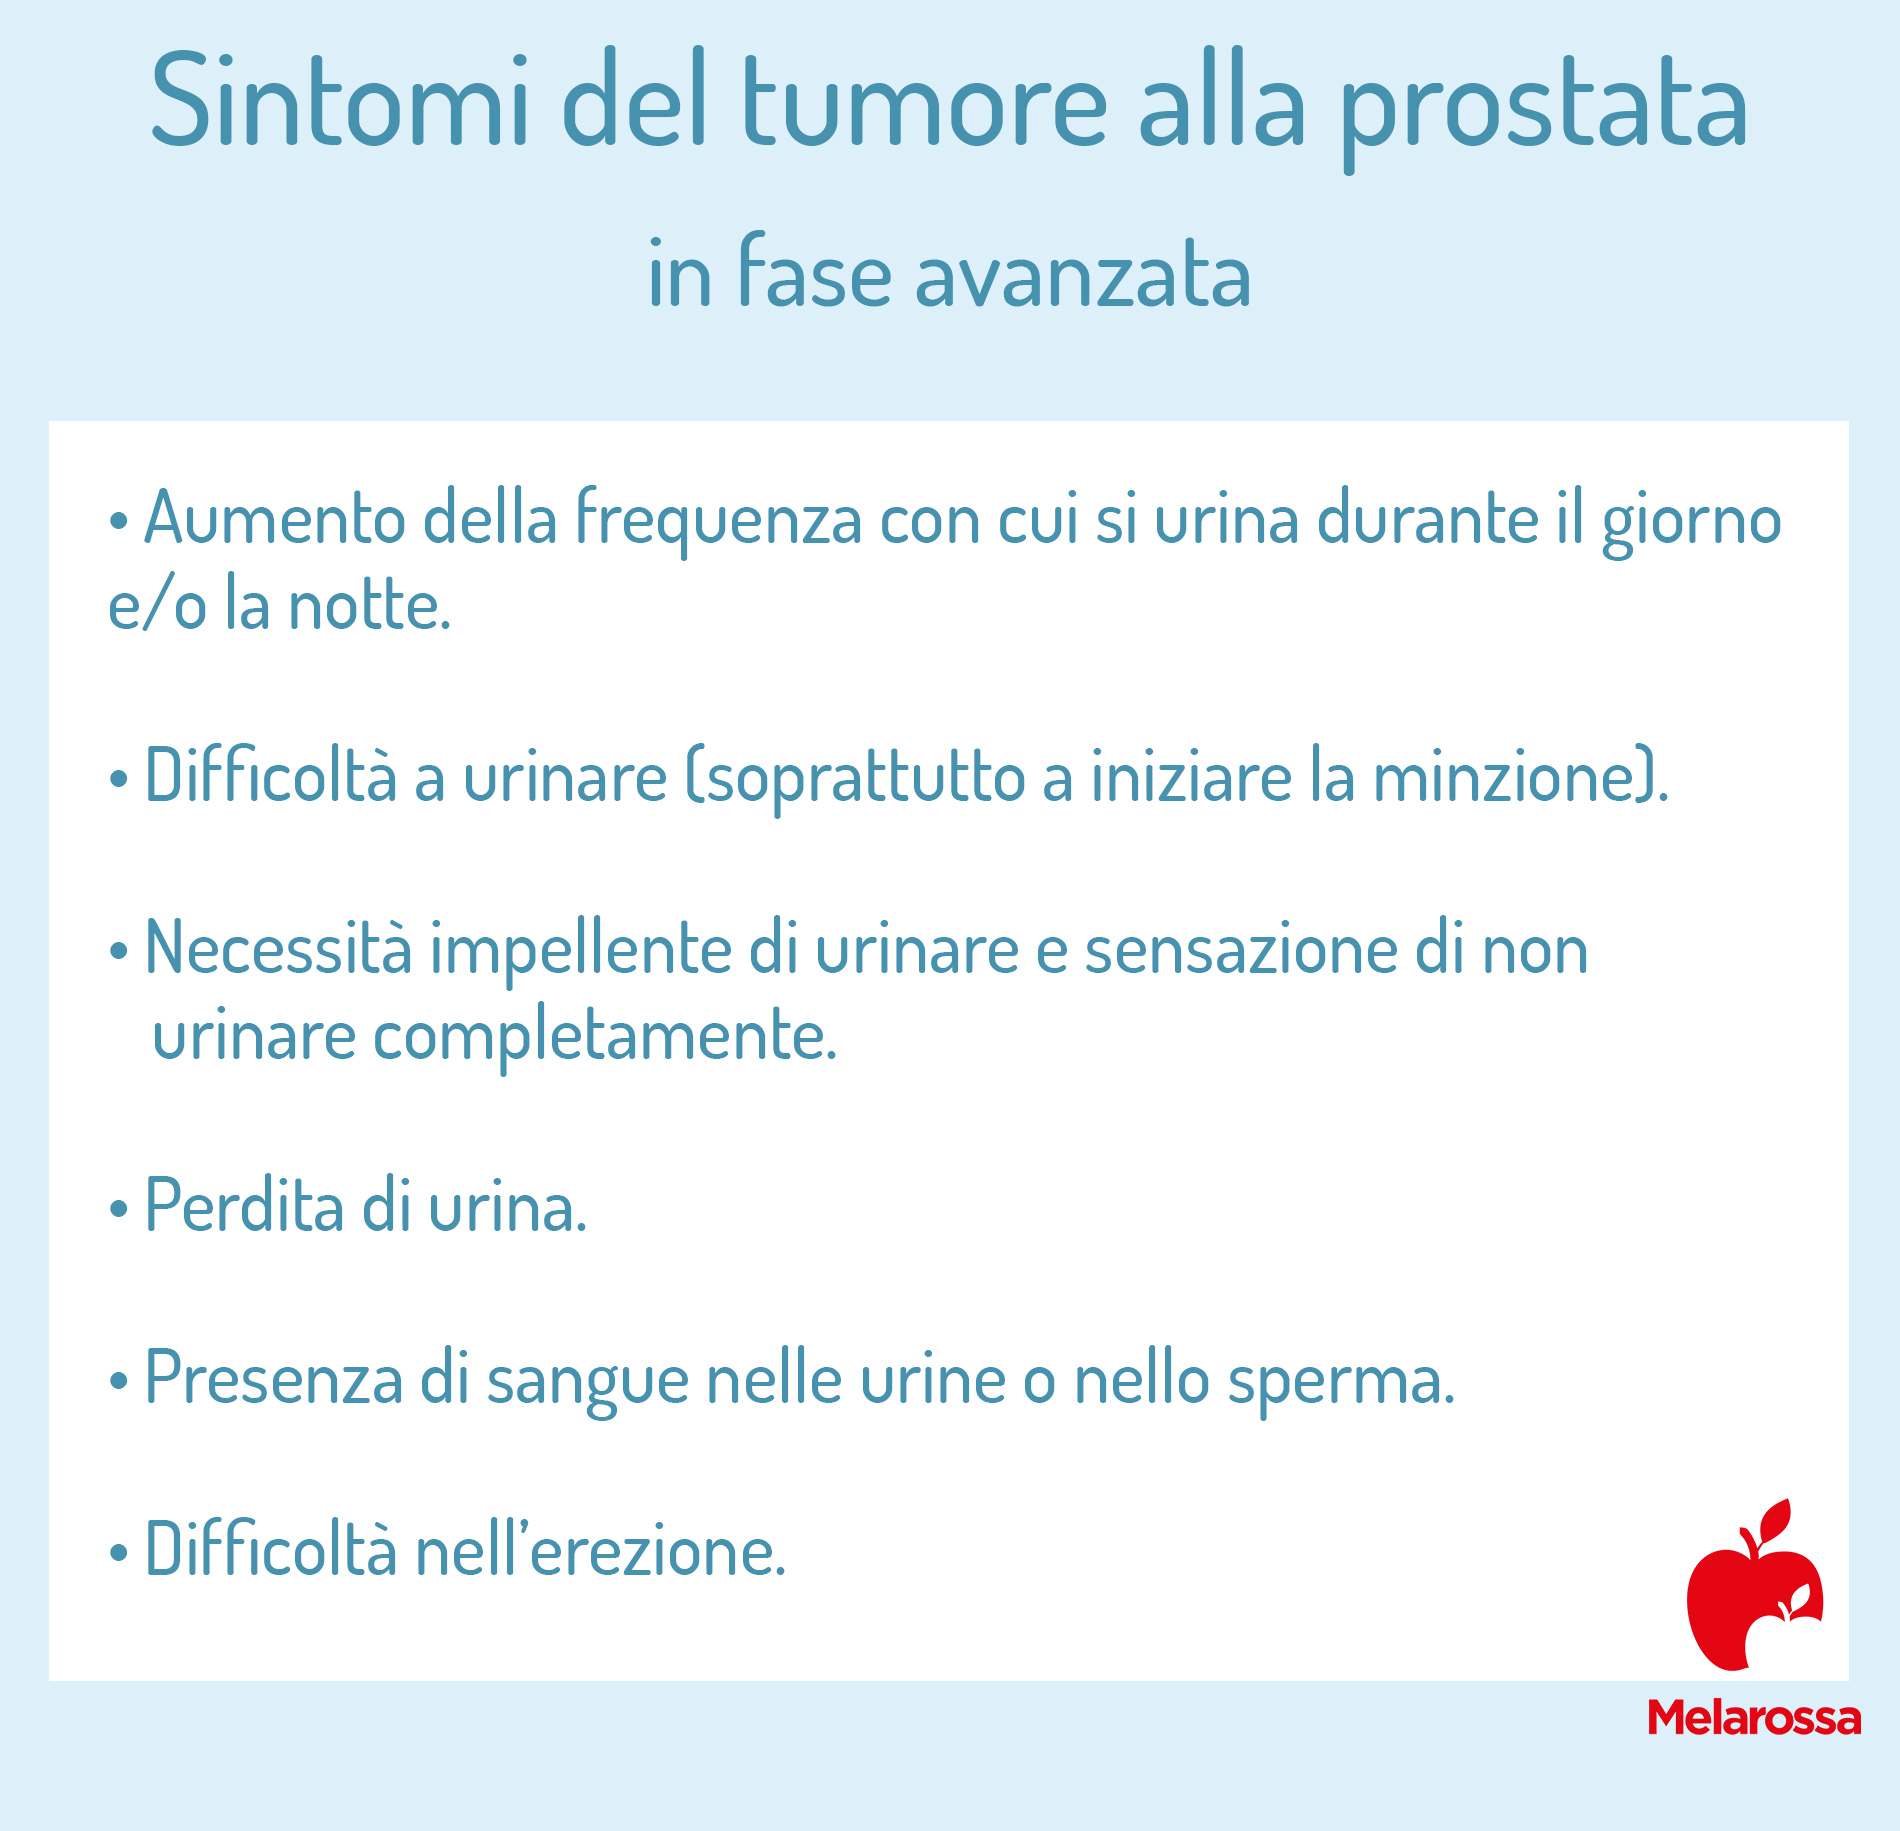 tumore alla prostata: sintomi